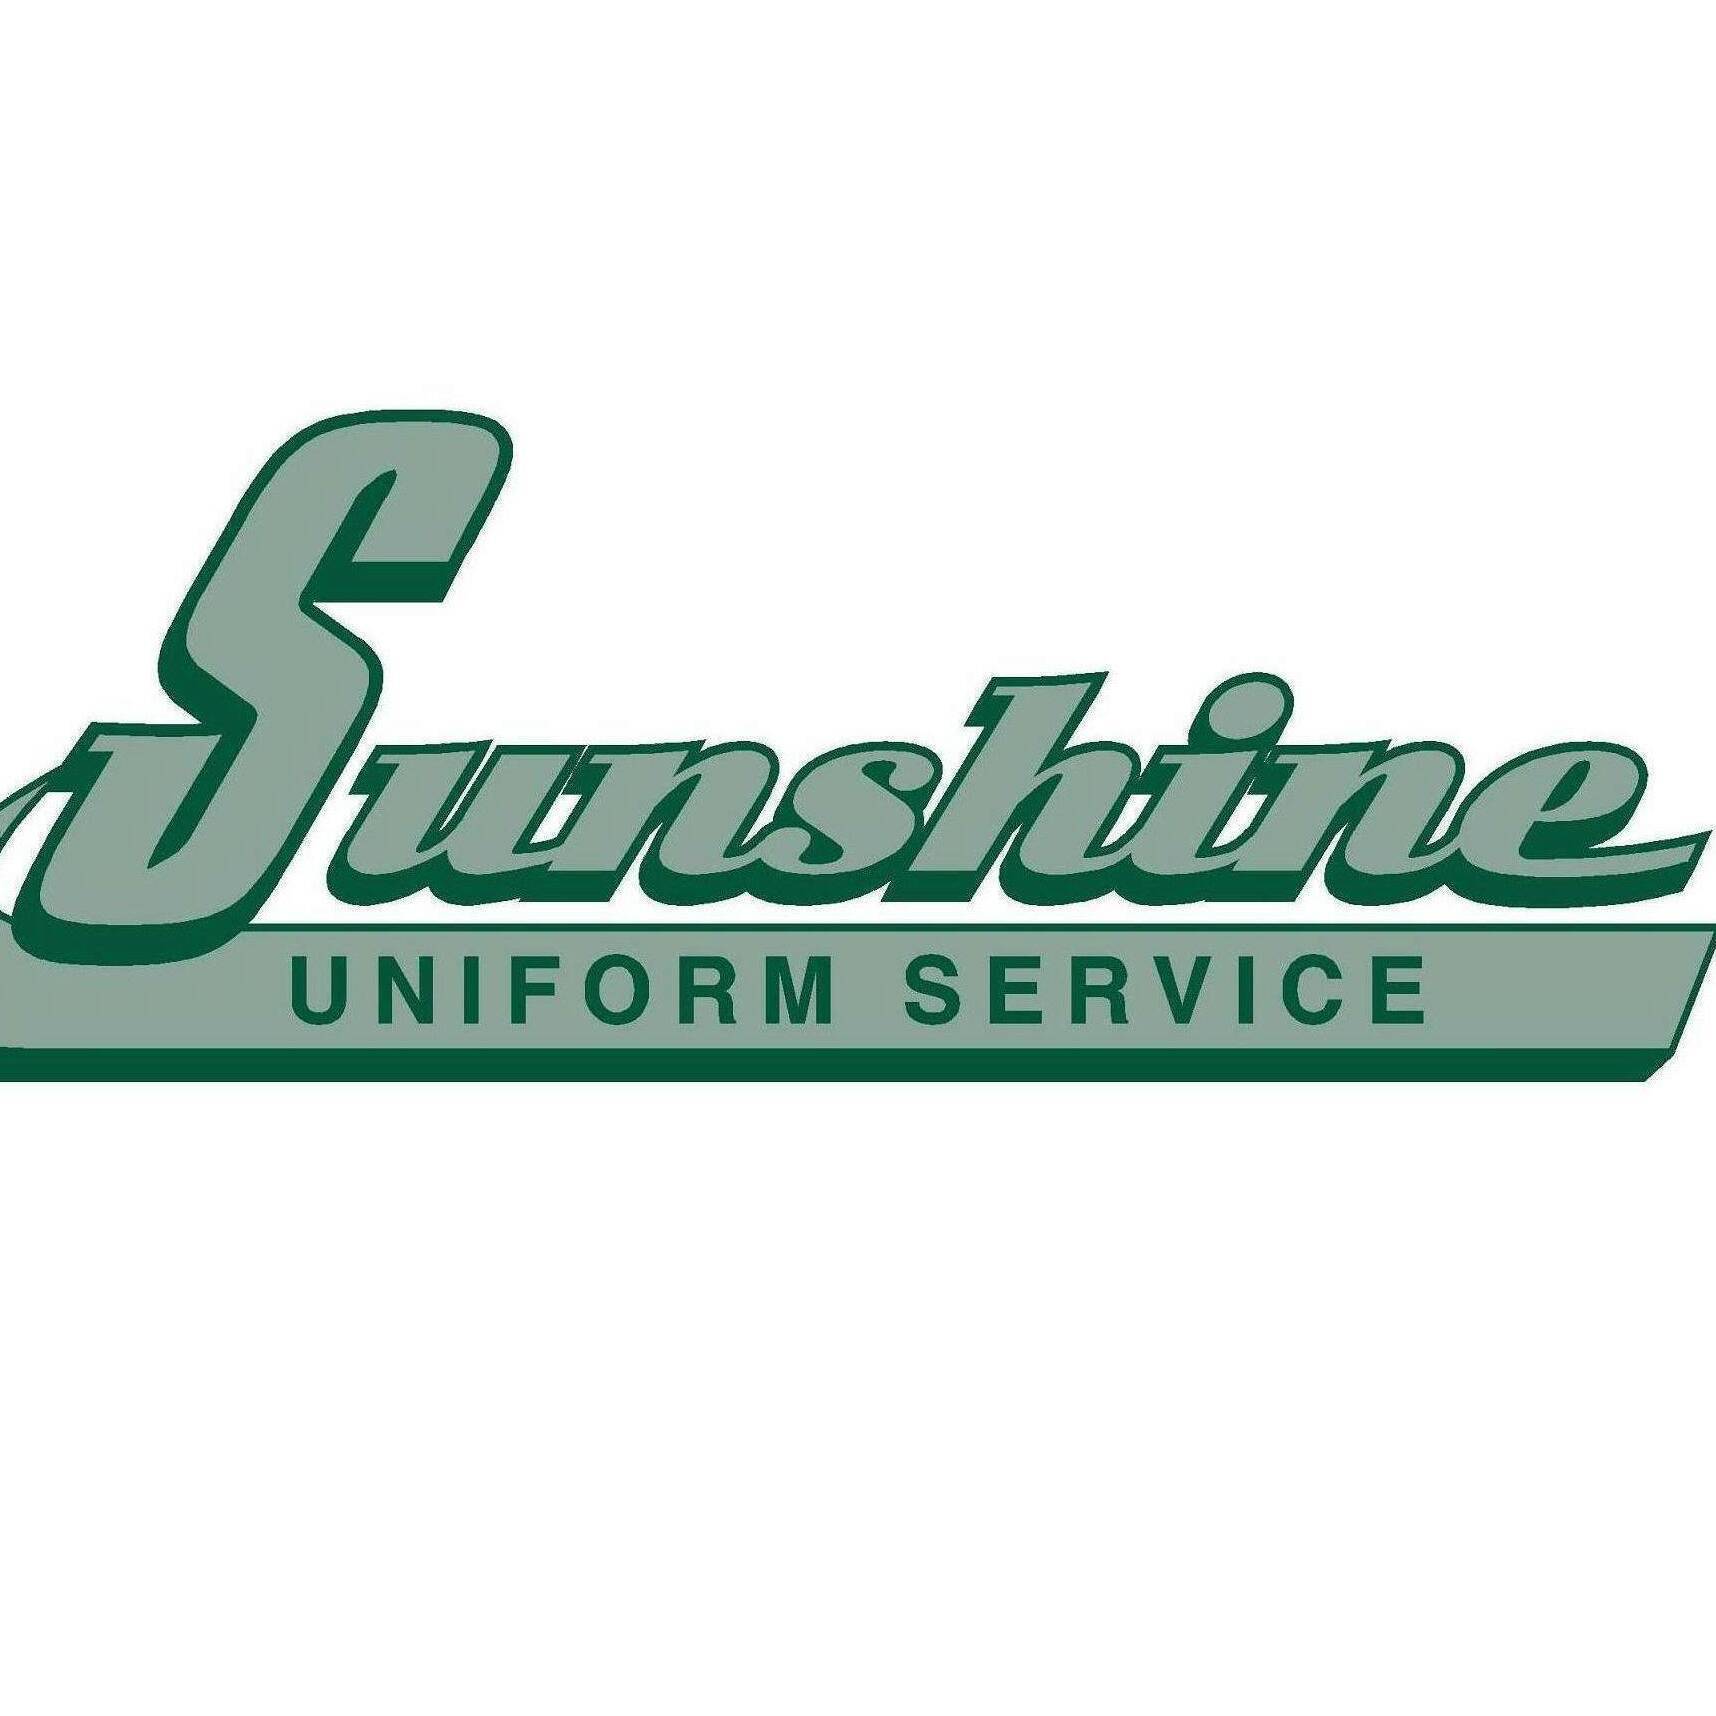 The North Carolina Association of Textile Services and Sunshine Uniform Service, Inc.